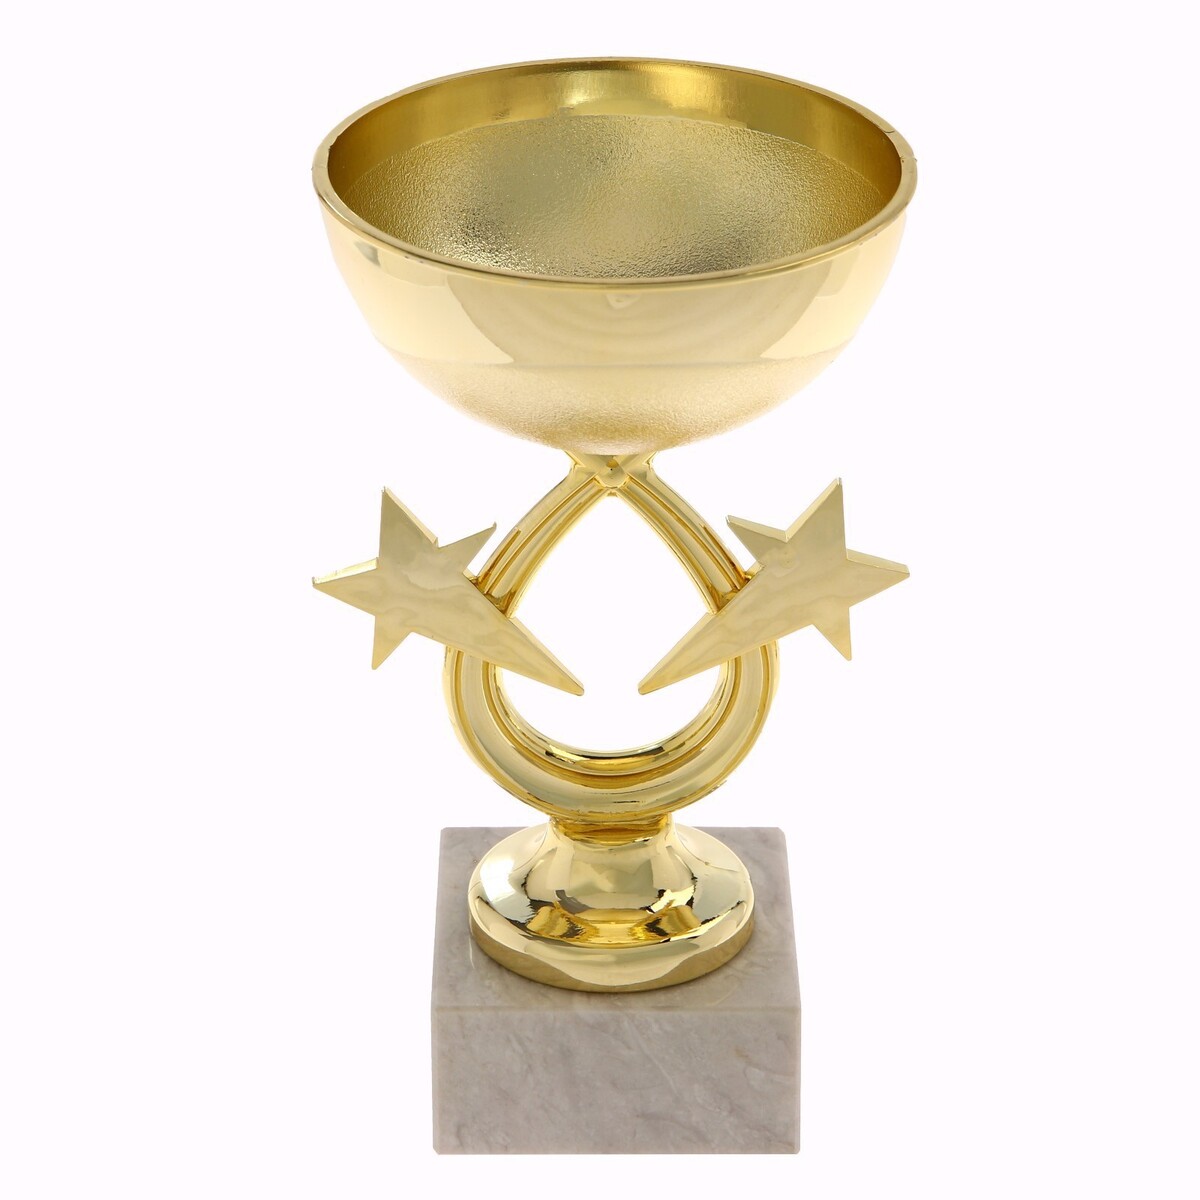 Кубок 156, наградная фигура, золото, подставка камень, 17,7 х 9,8 х 6,1 см. камень веры яворский